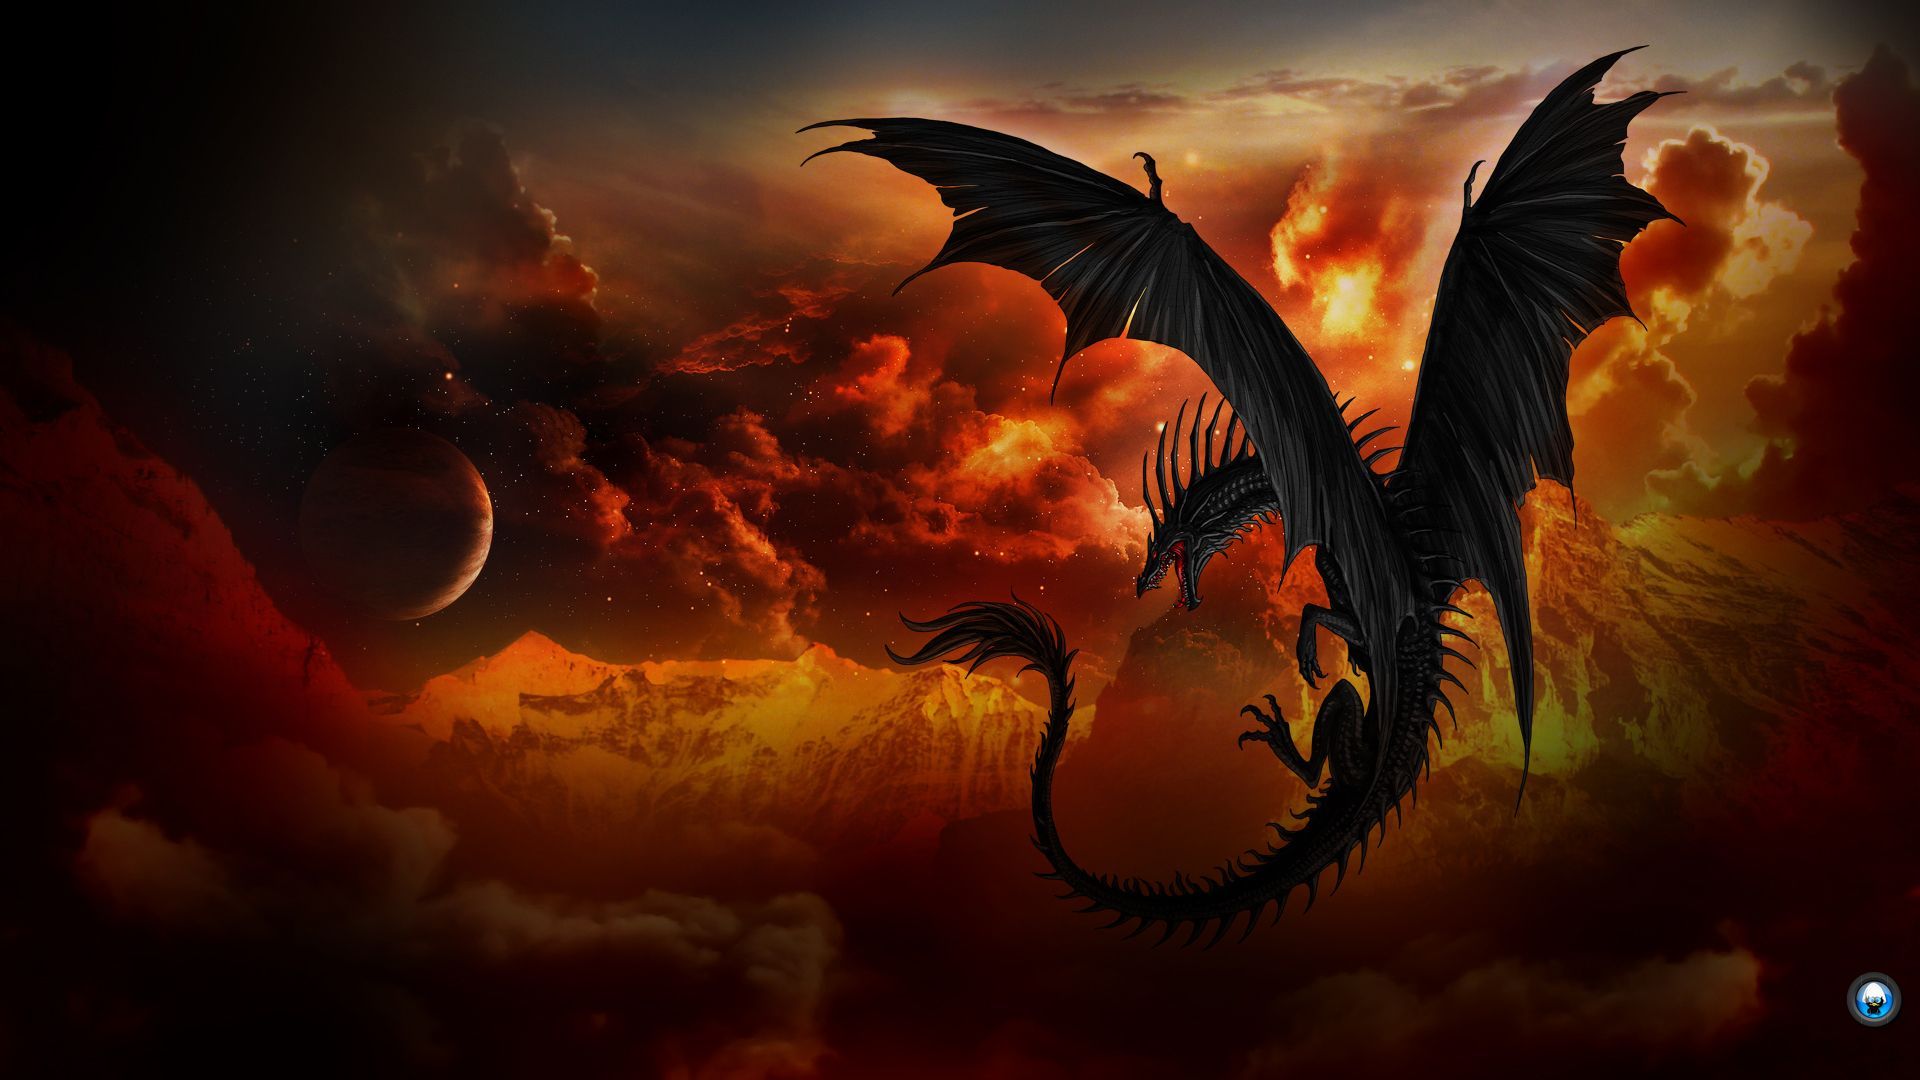 Dragon Unicorn HD Wallpaper. Dragon picture, Dragon image, Fantasy dragon